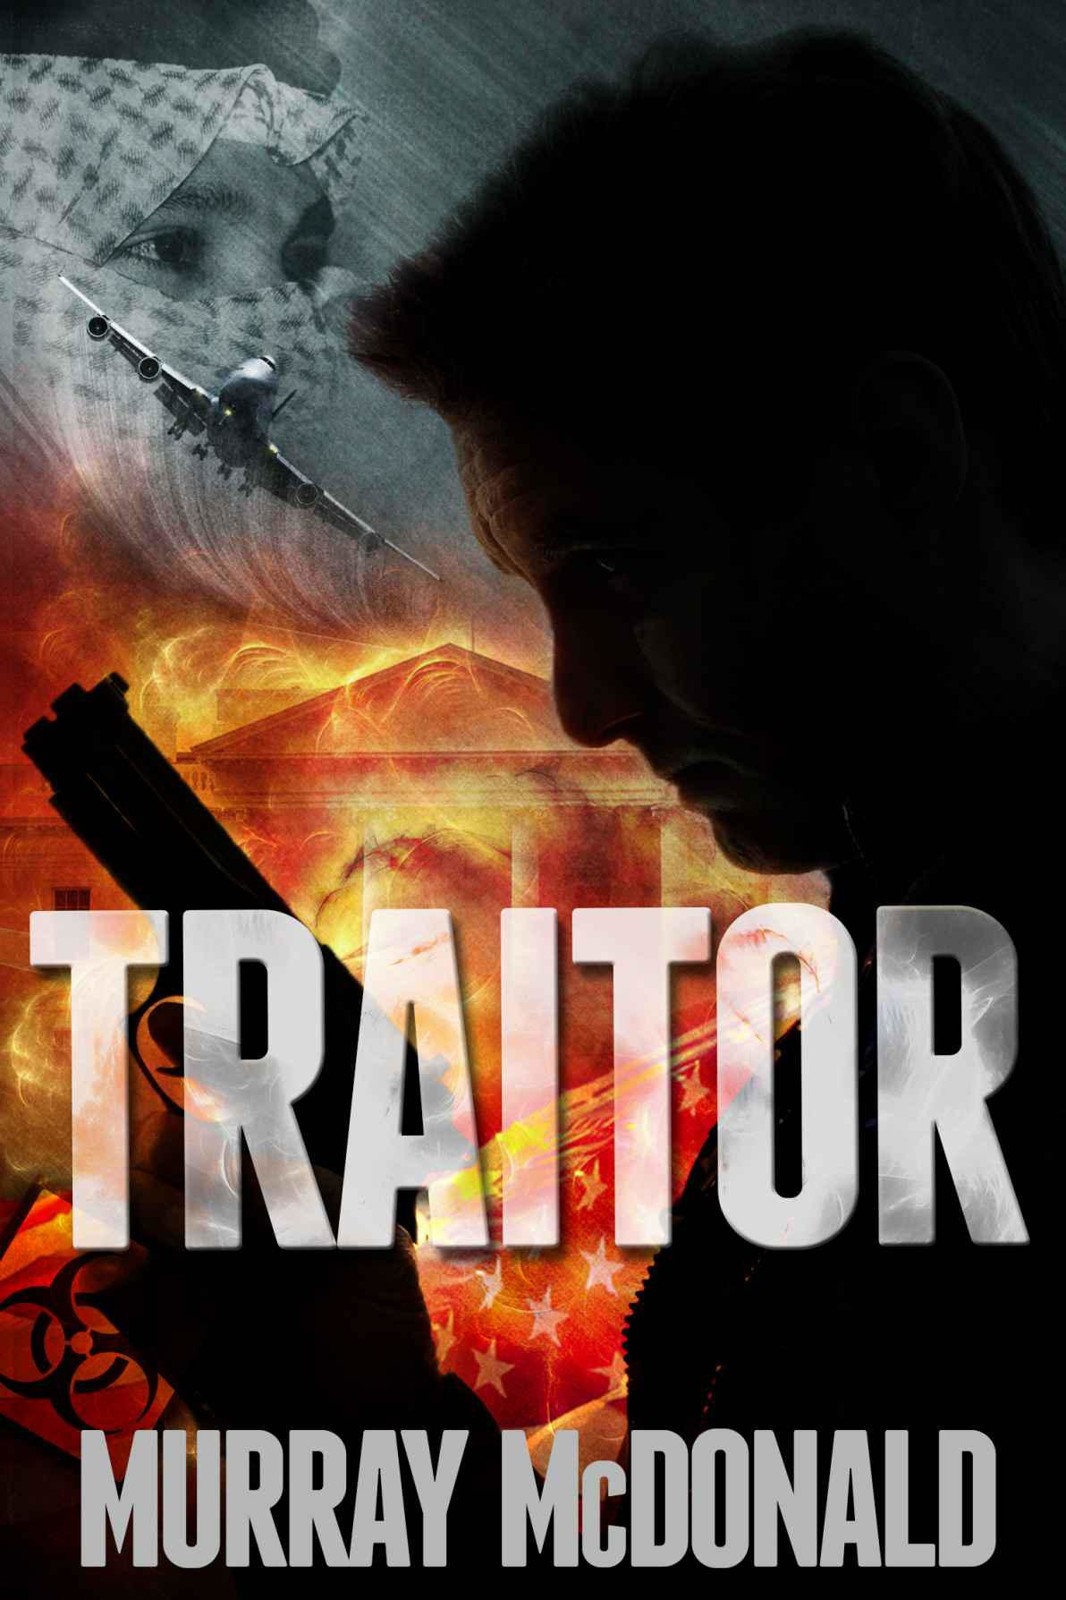 Traitor